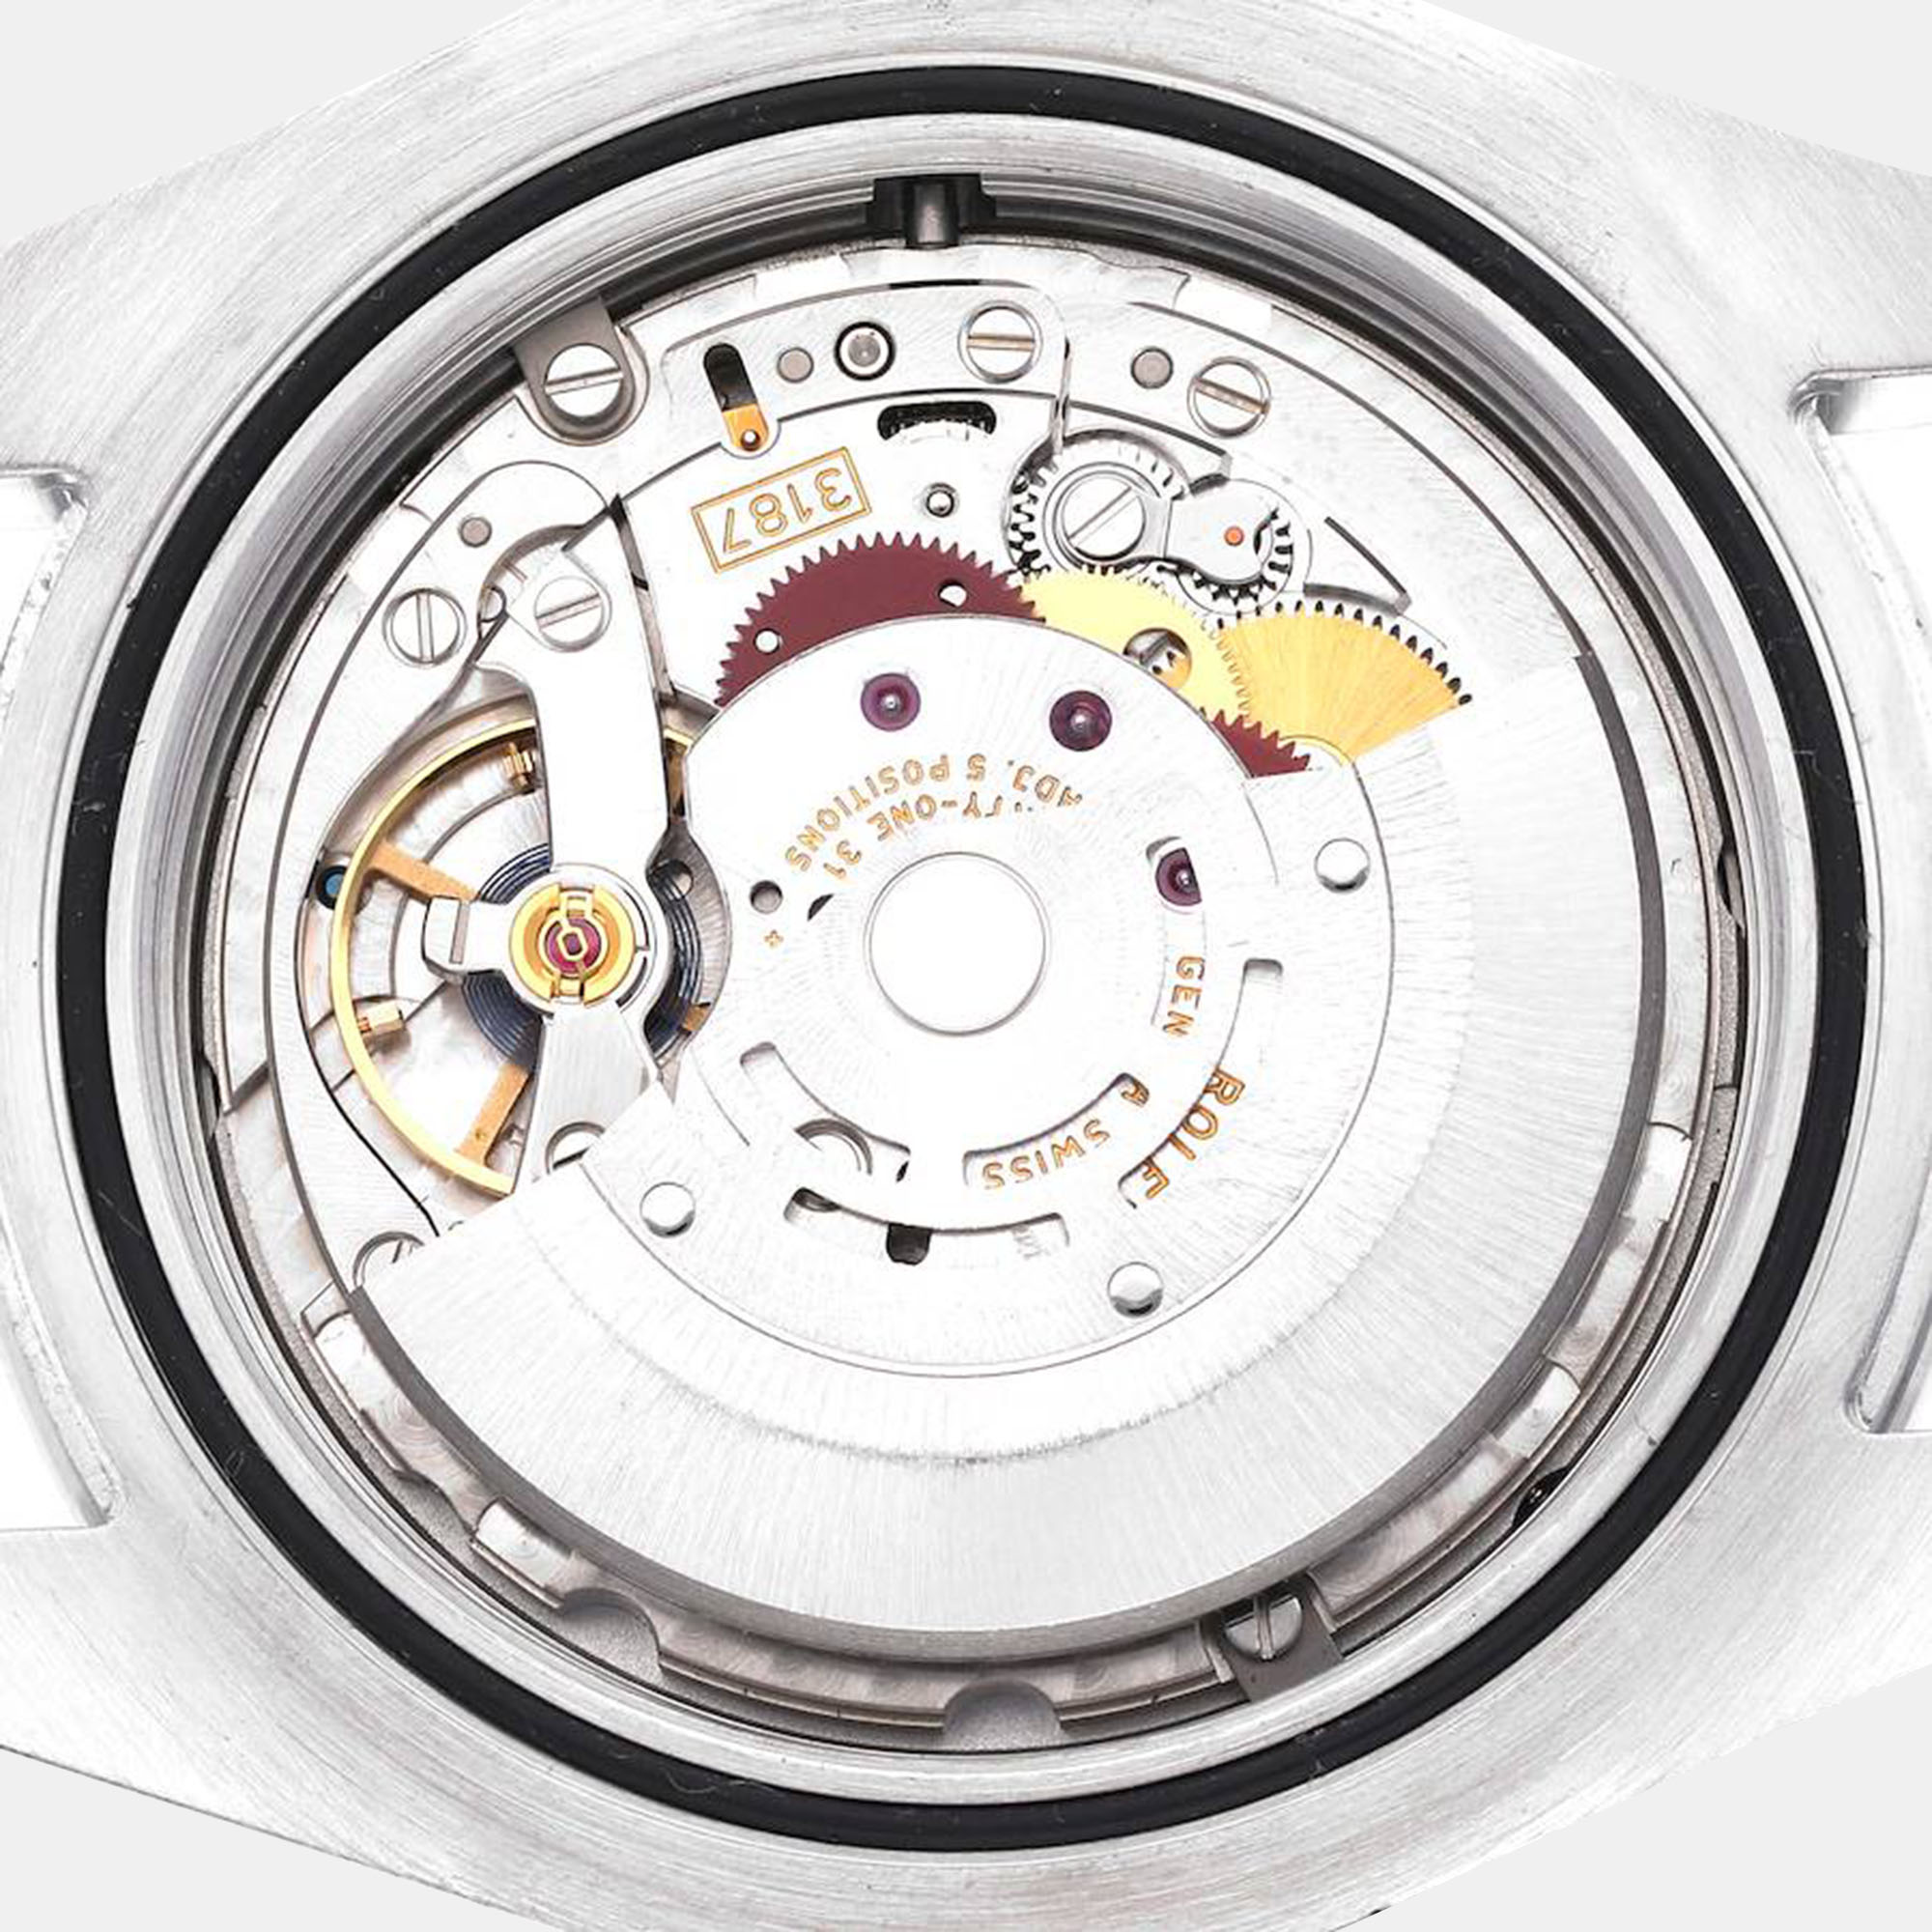 Rolex Explorer II White Dial Orange Hand Steel Men's Watch 216570 42 Mm